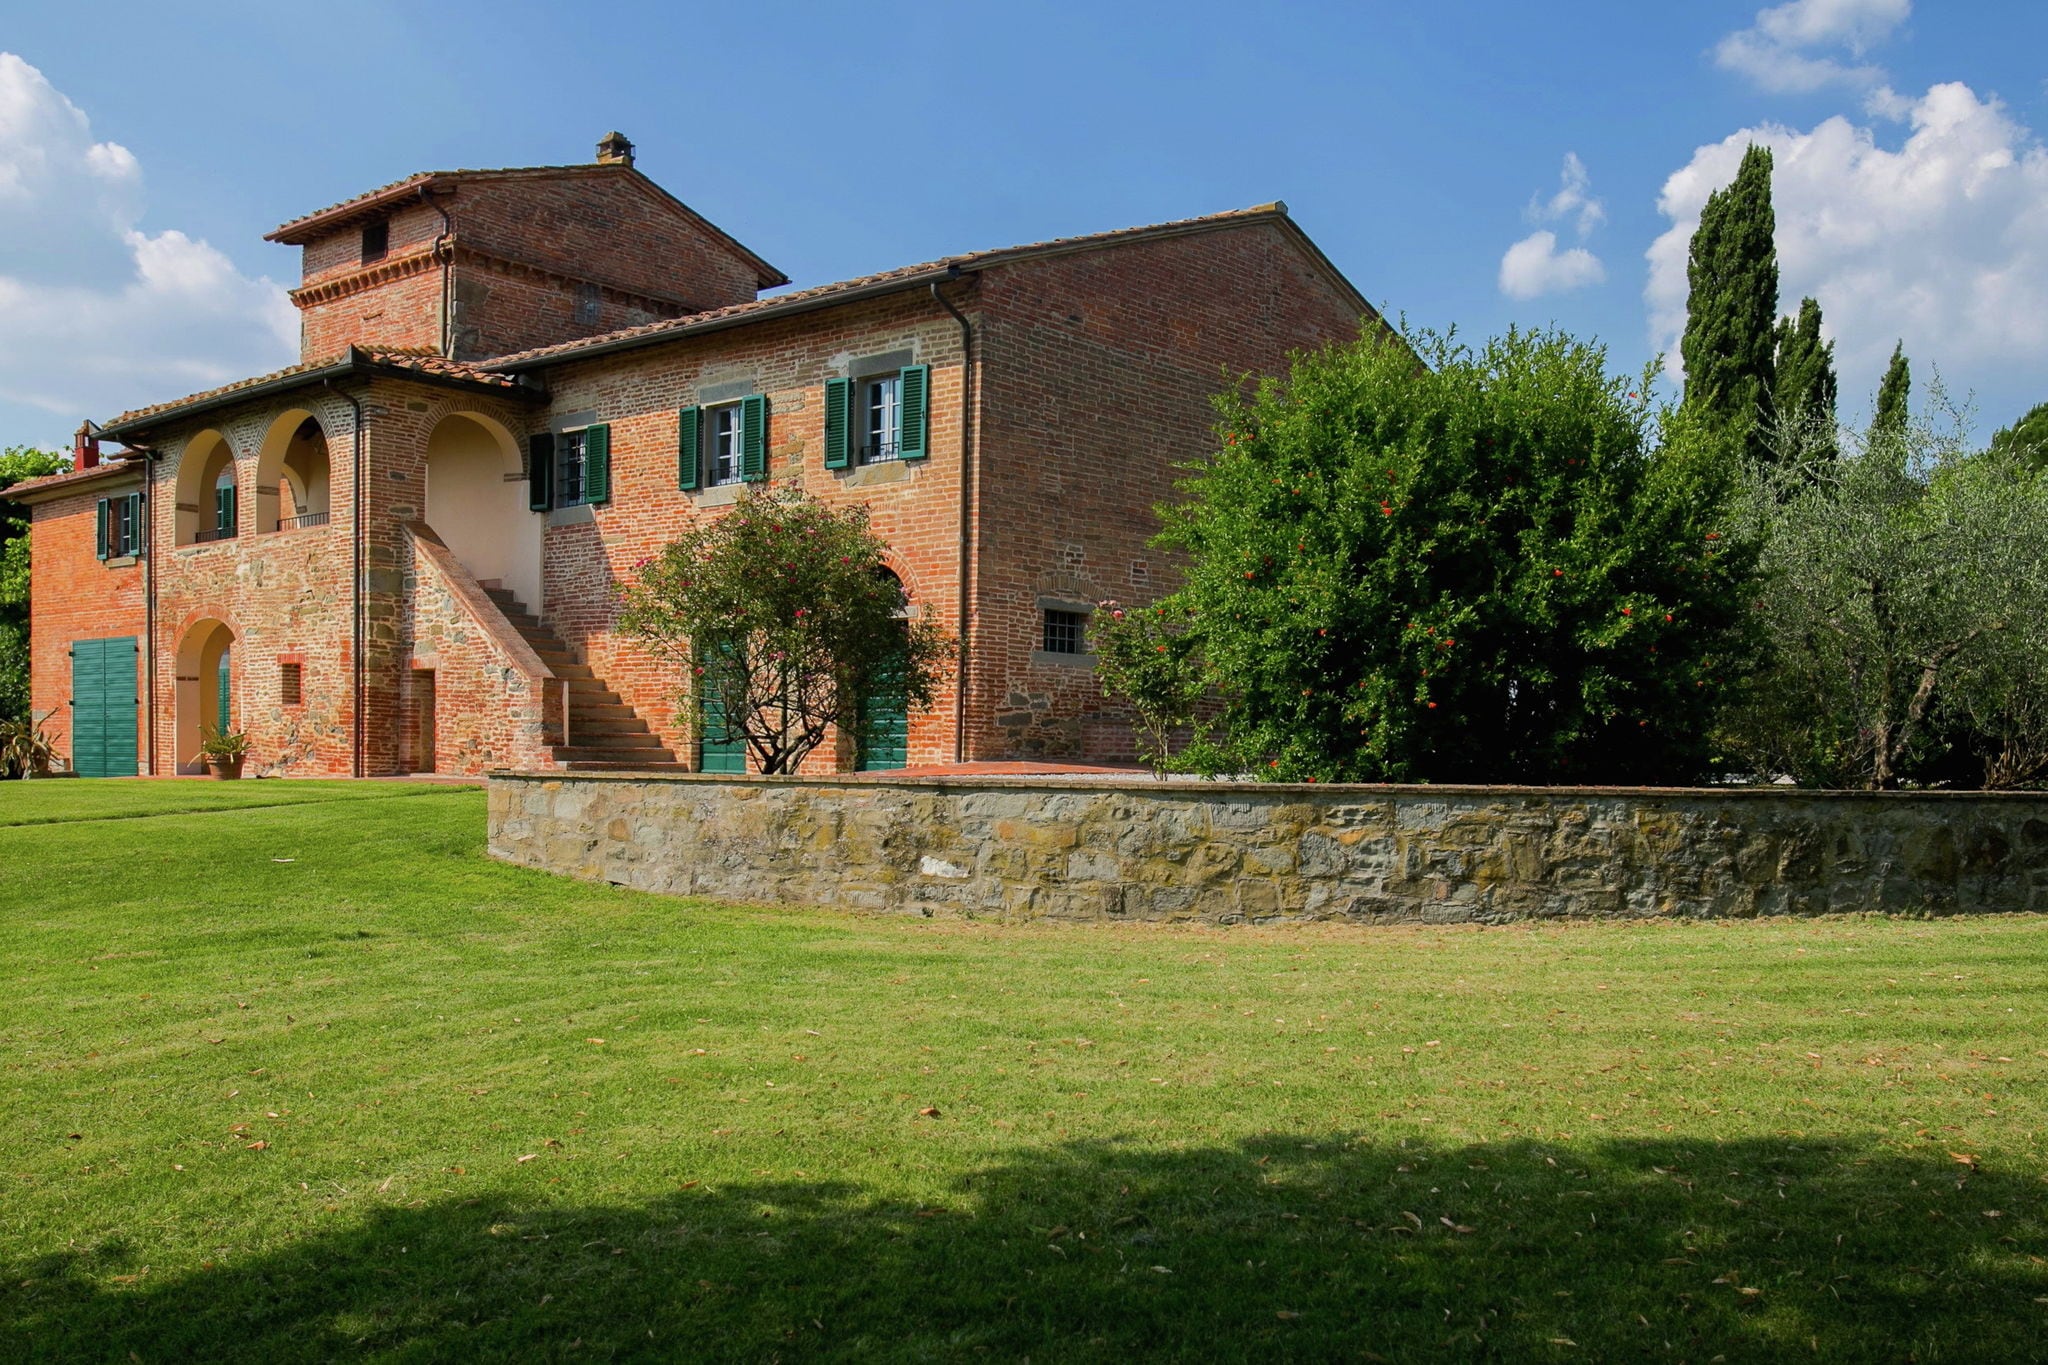 Villa met privézwembad en ruime tuin in de Valdichiana, dichtbij Cortona